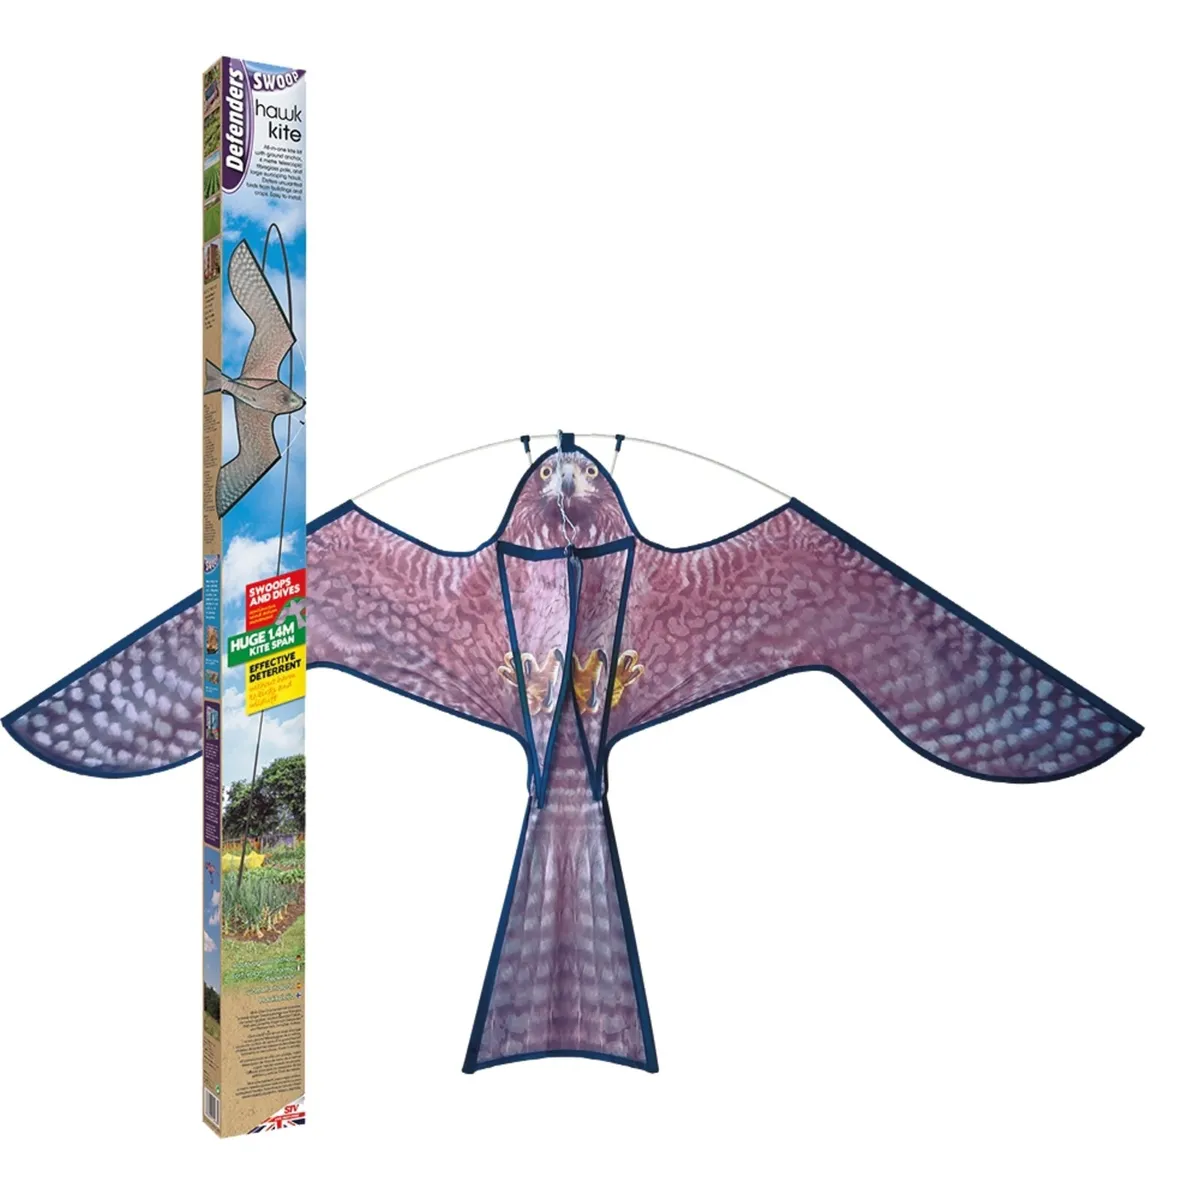 Swoop Hawk Kite Bird Scarer